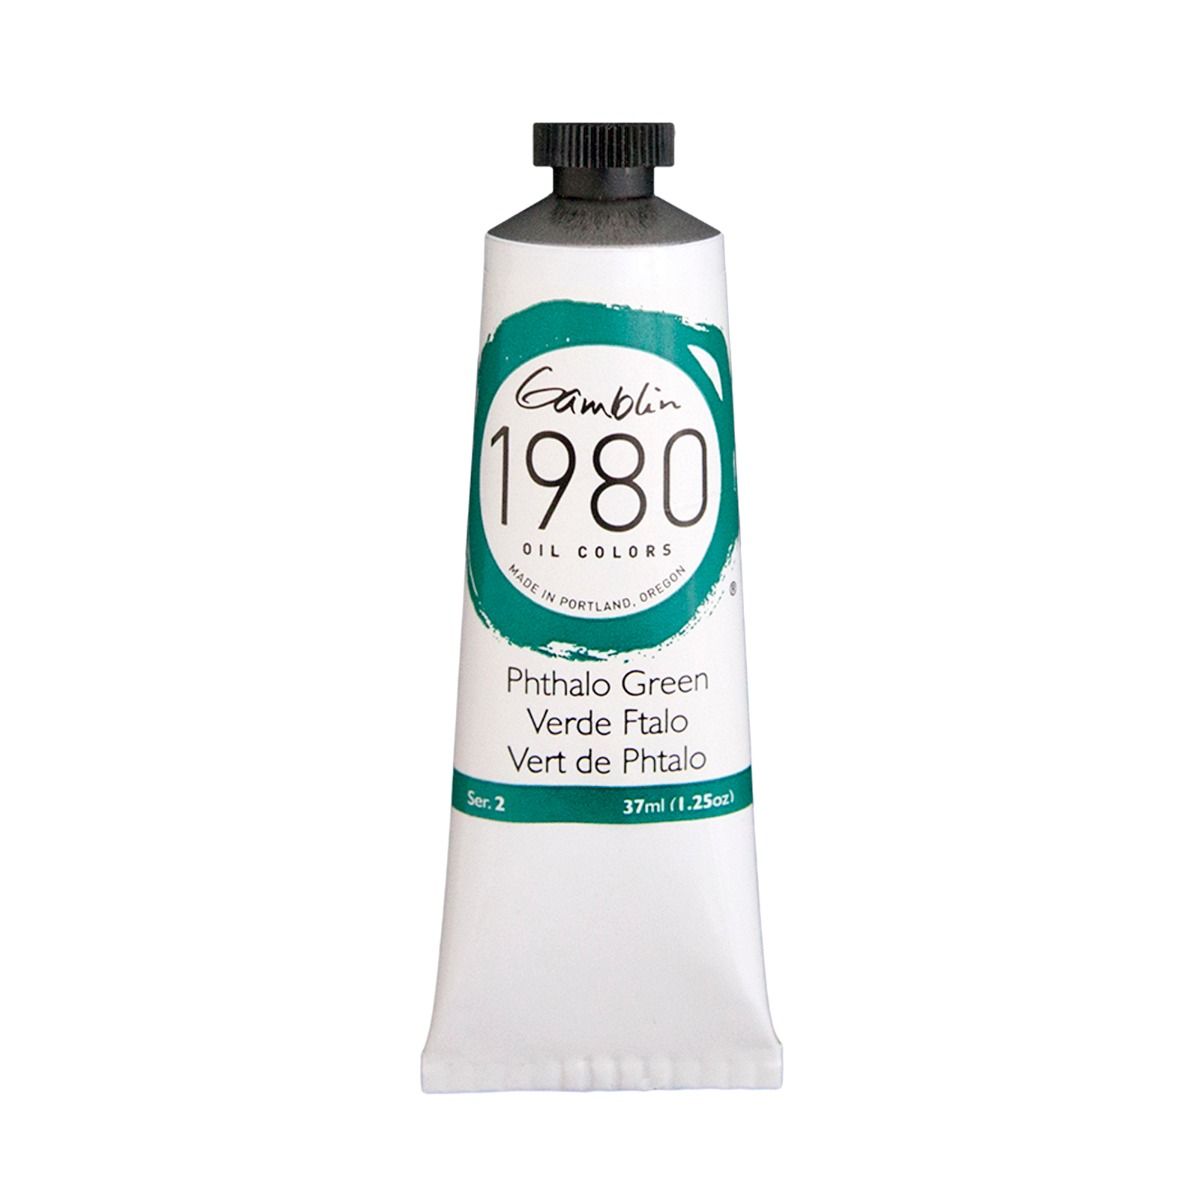 Gamblin 1980 Oils - Phthalo Green, 37 ml (1.25oz)